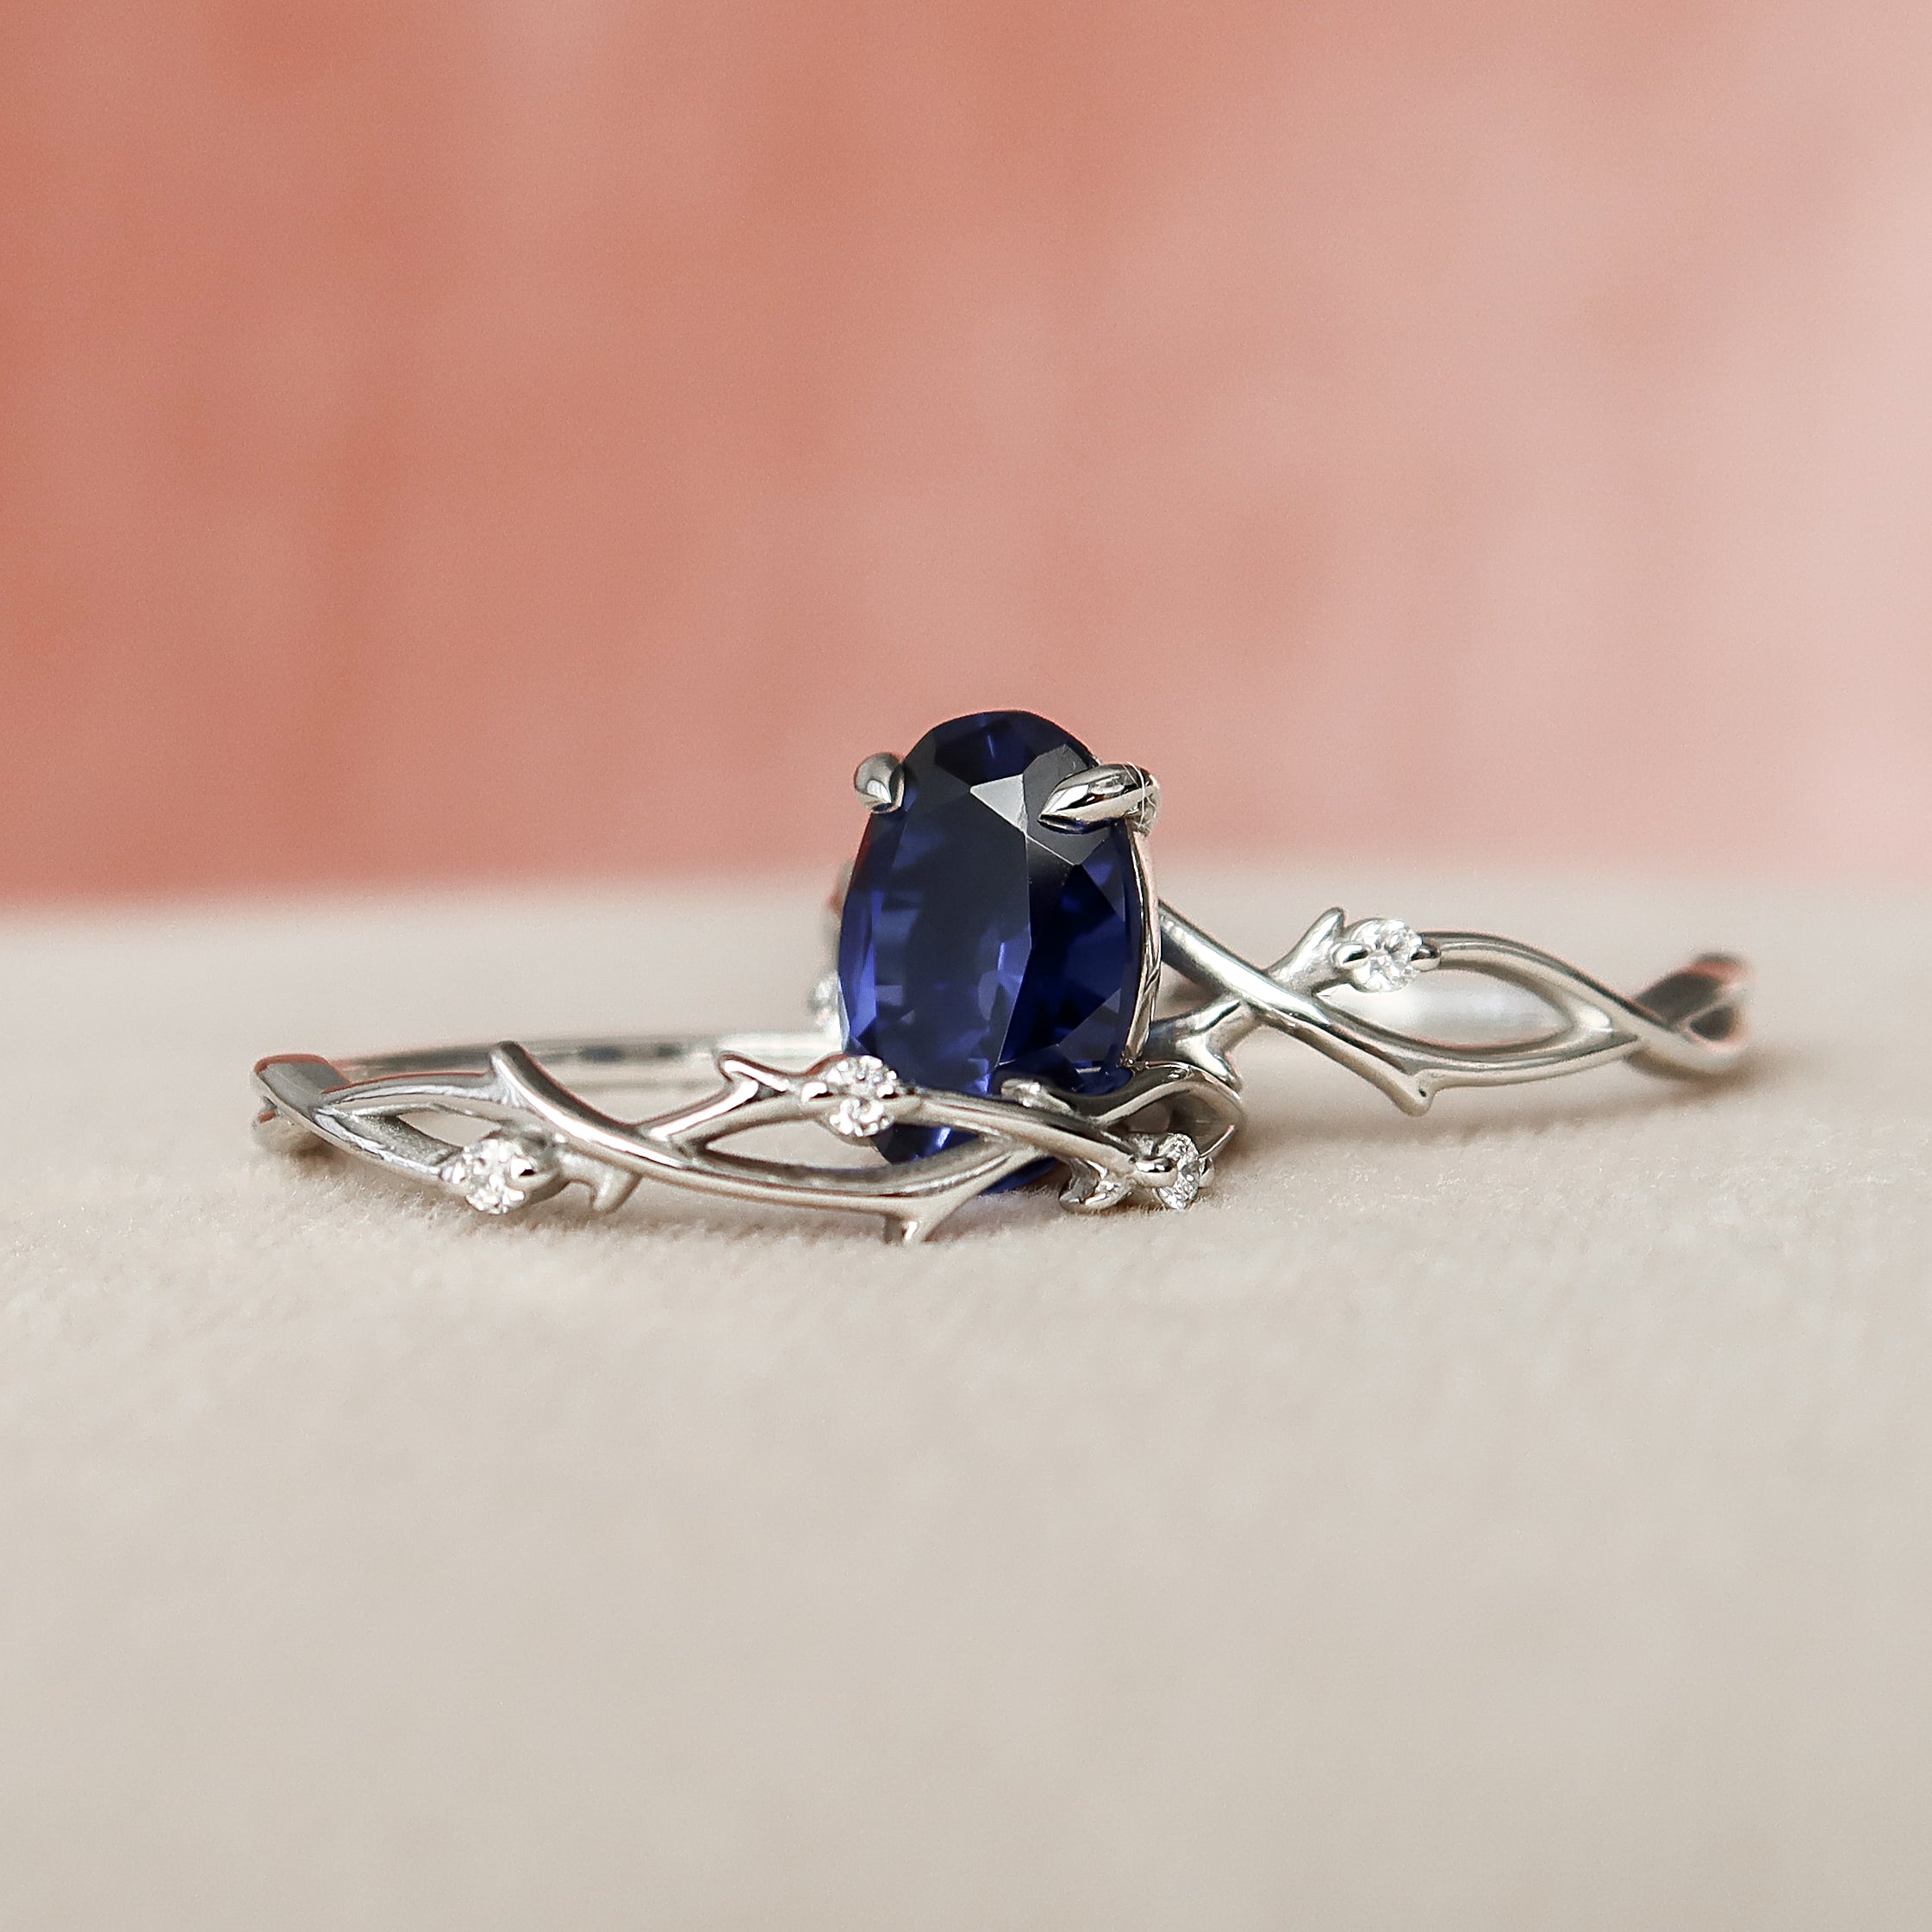 Why choose gemstone engagement rings?